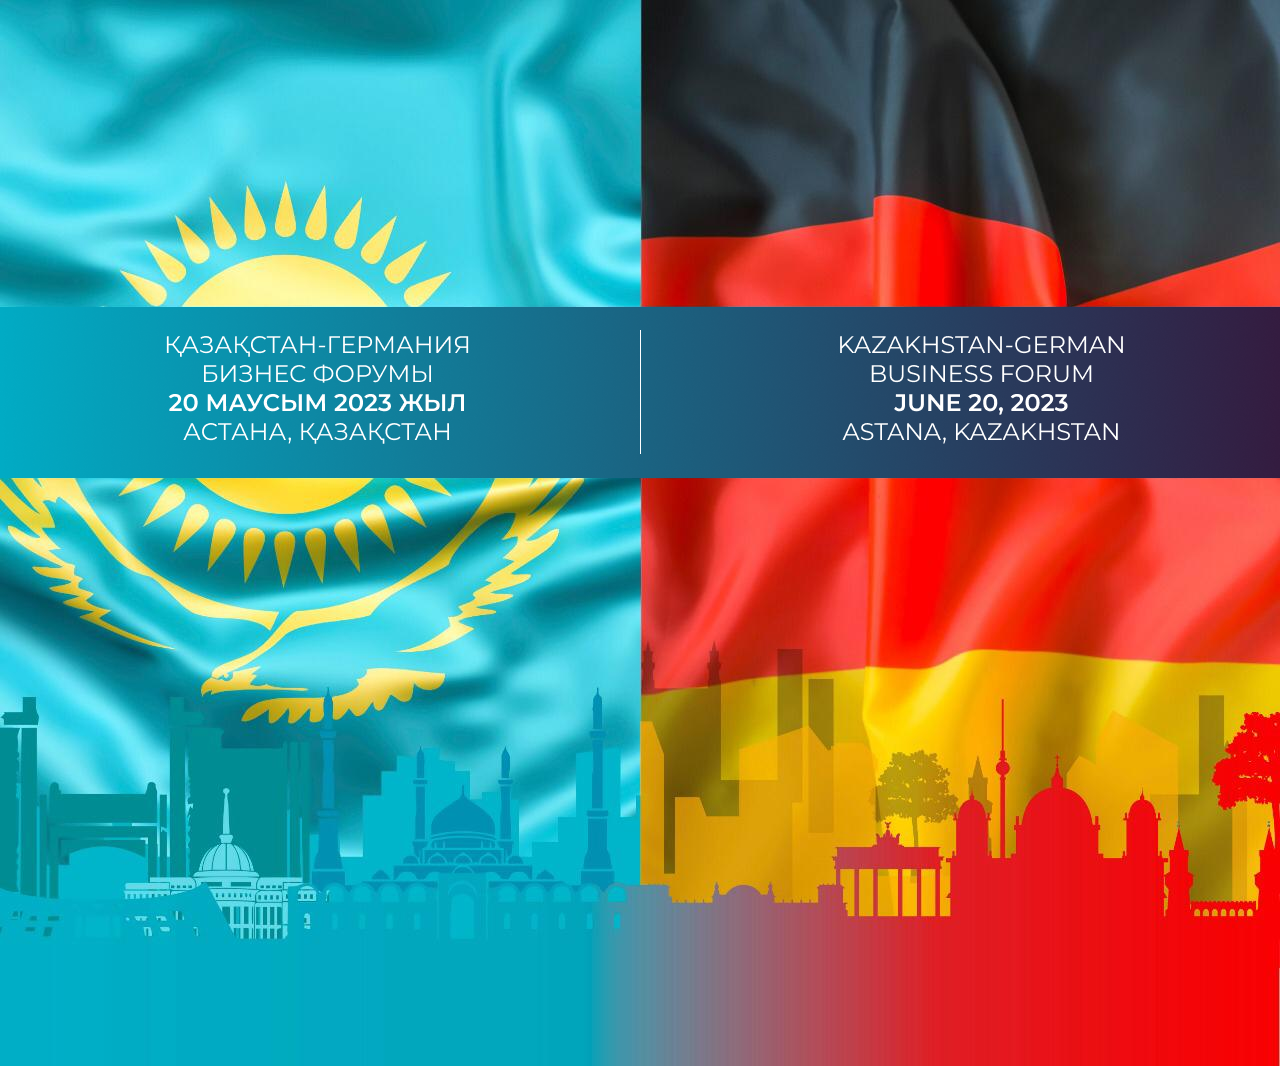 Kazakhstan-German Business Forum